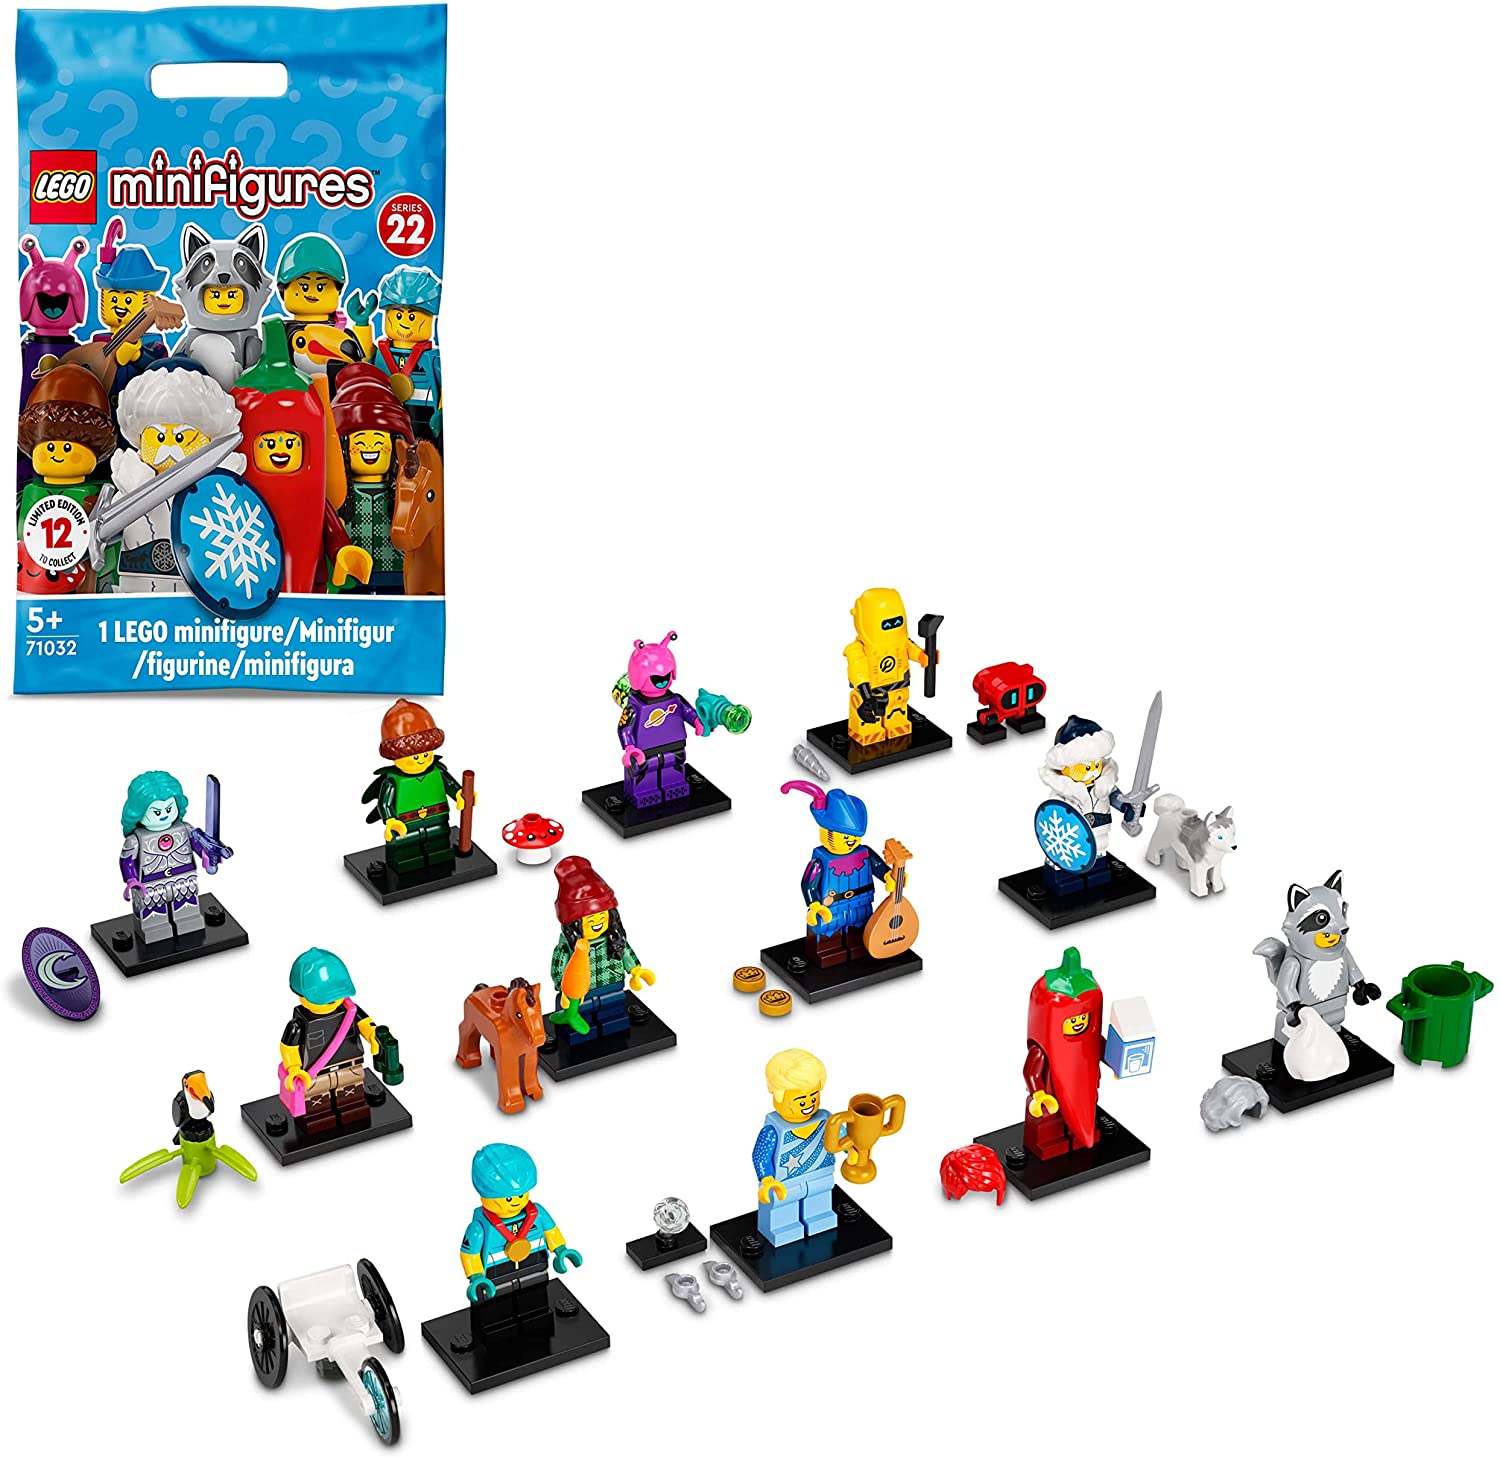 LEGO 71032 Minifigures Minifiguren Serie 22, 1 von 12 Sammelfiguren, Sammle